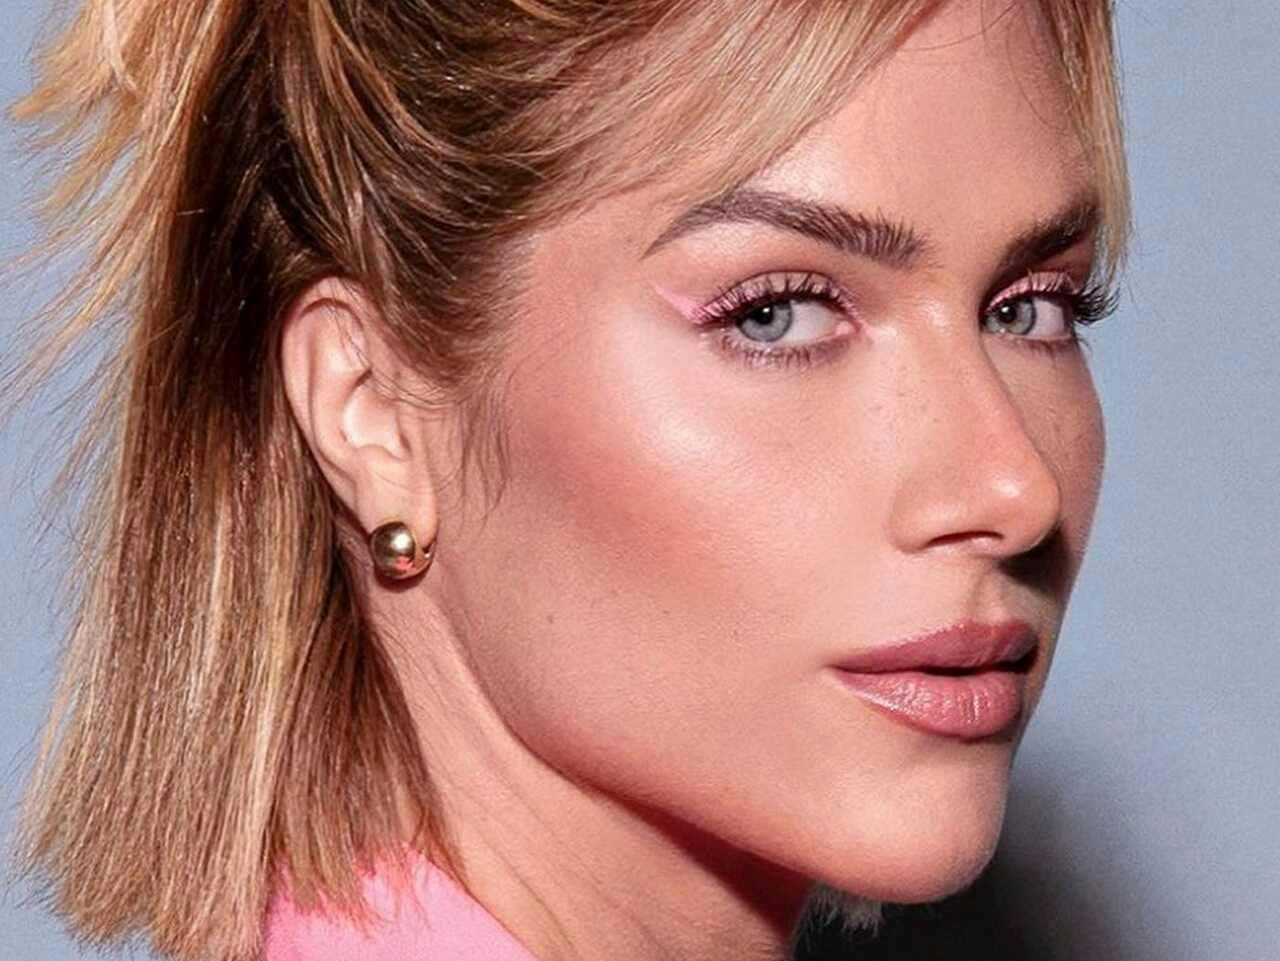 earring jewelry head person face adult female woman skin lipstick